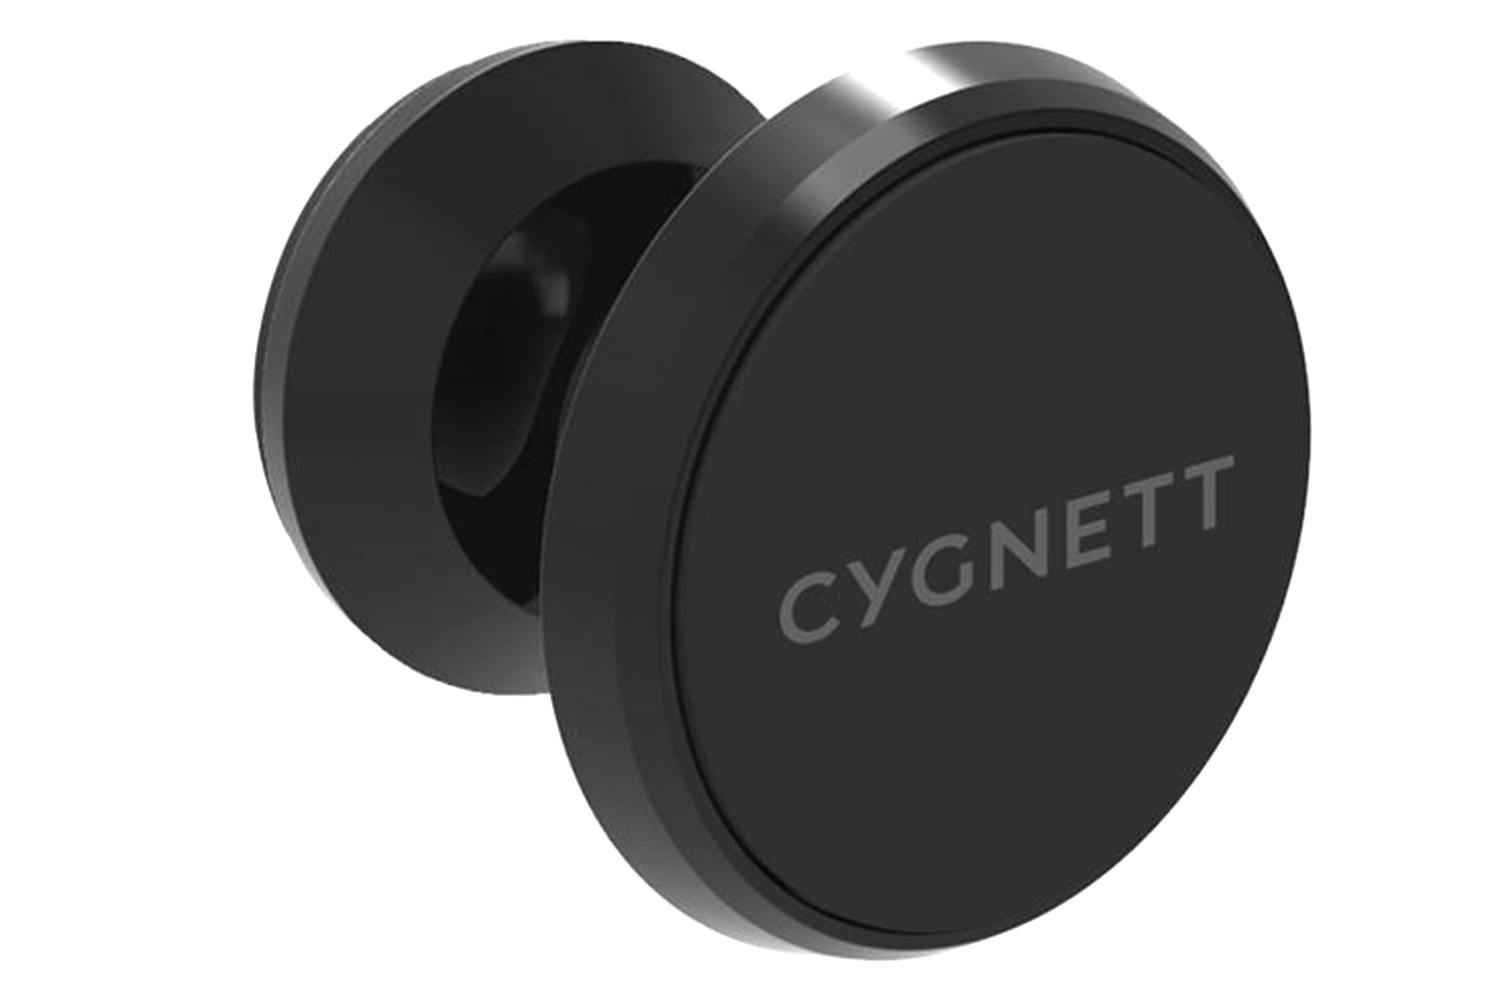 Cygnett Premium Magnetic Dash & Window Phone Mount